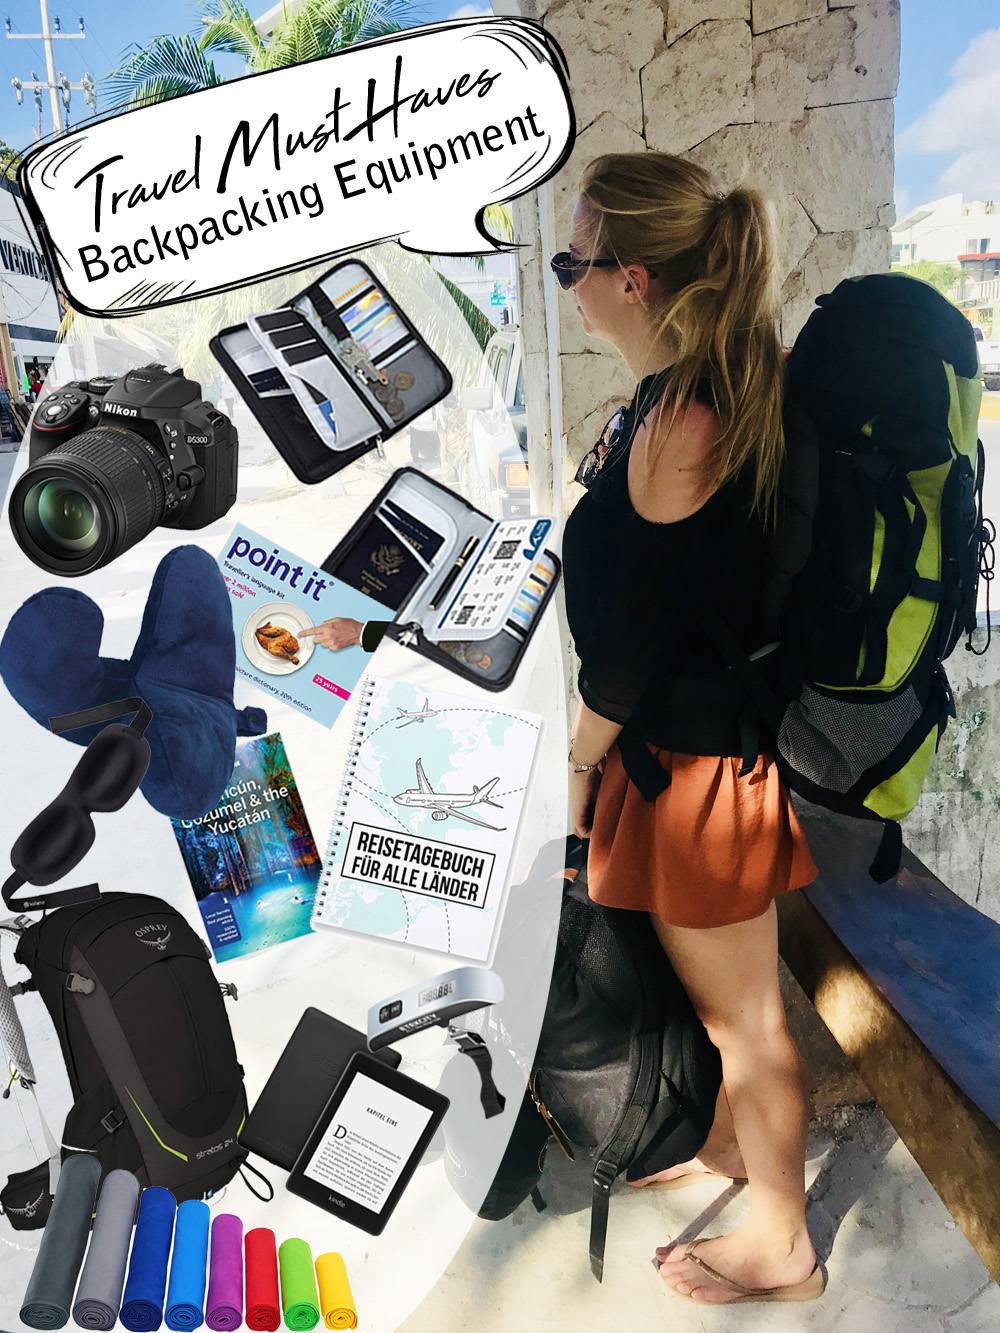 https://katha-strophal.de/wp-content/uploads/2019/08/backpacking-equipment.jpg